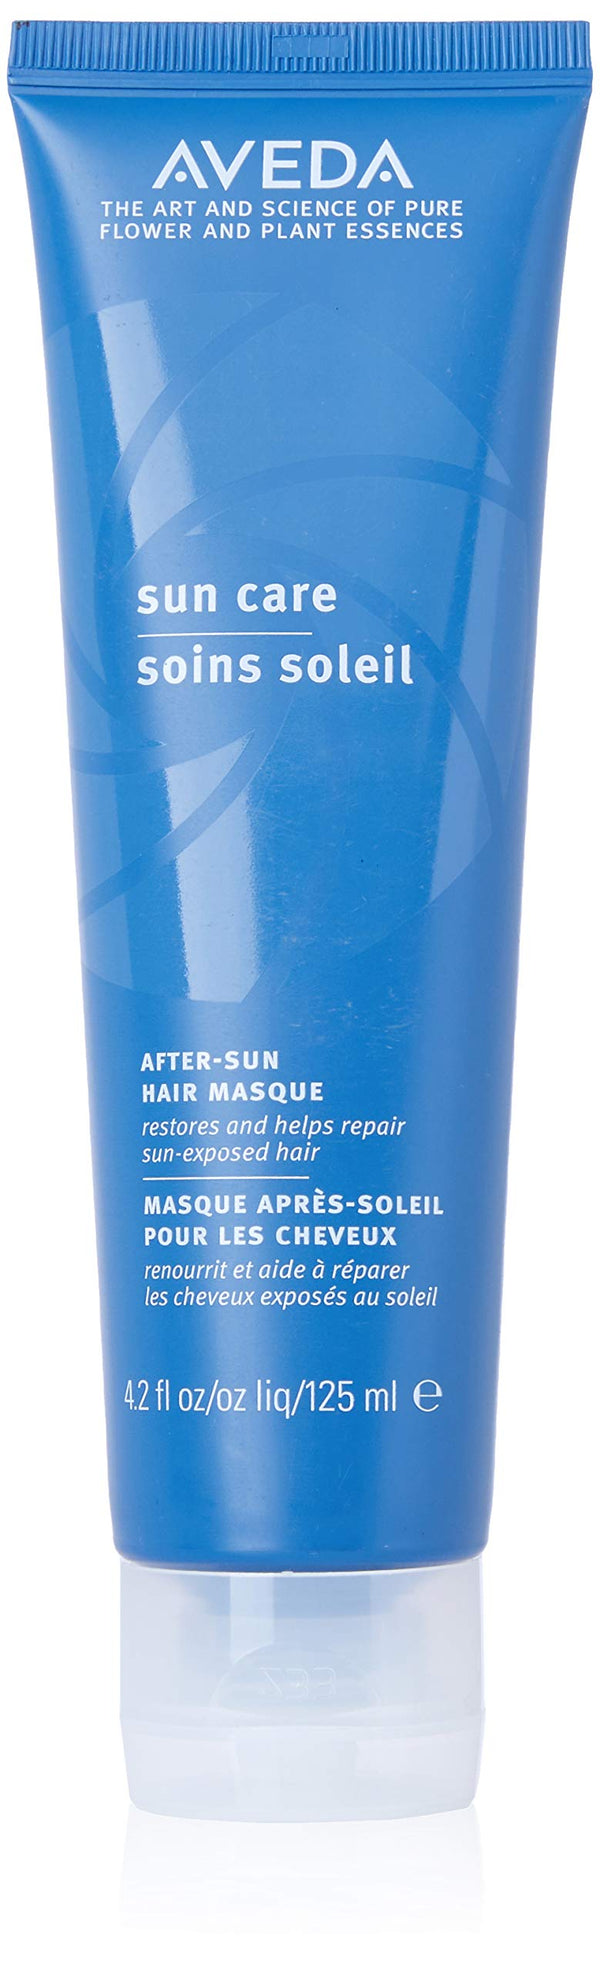 Aveda After-Sun Treatment Hair Masque 125ml